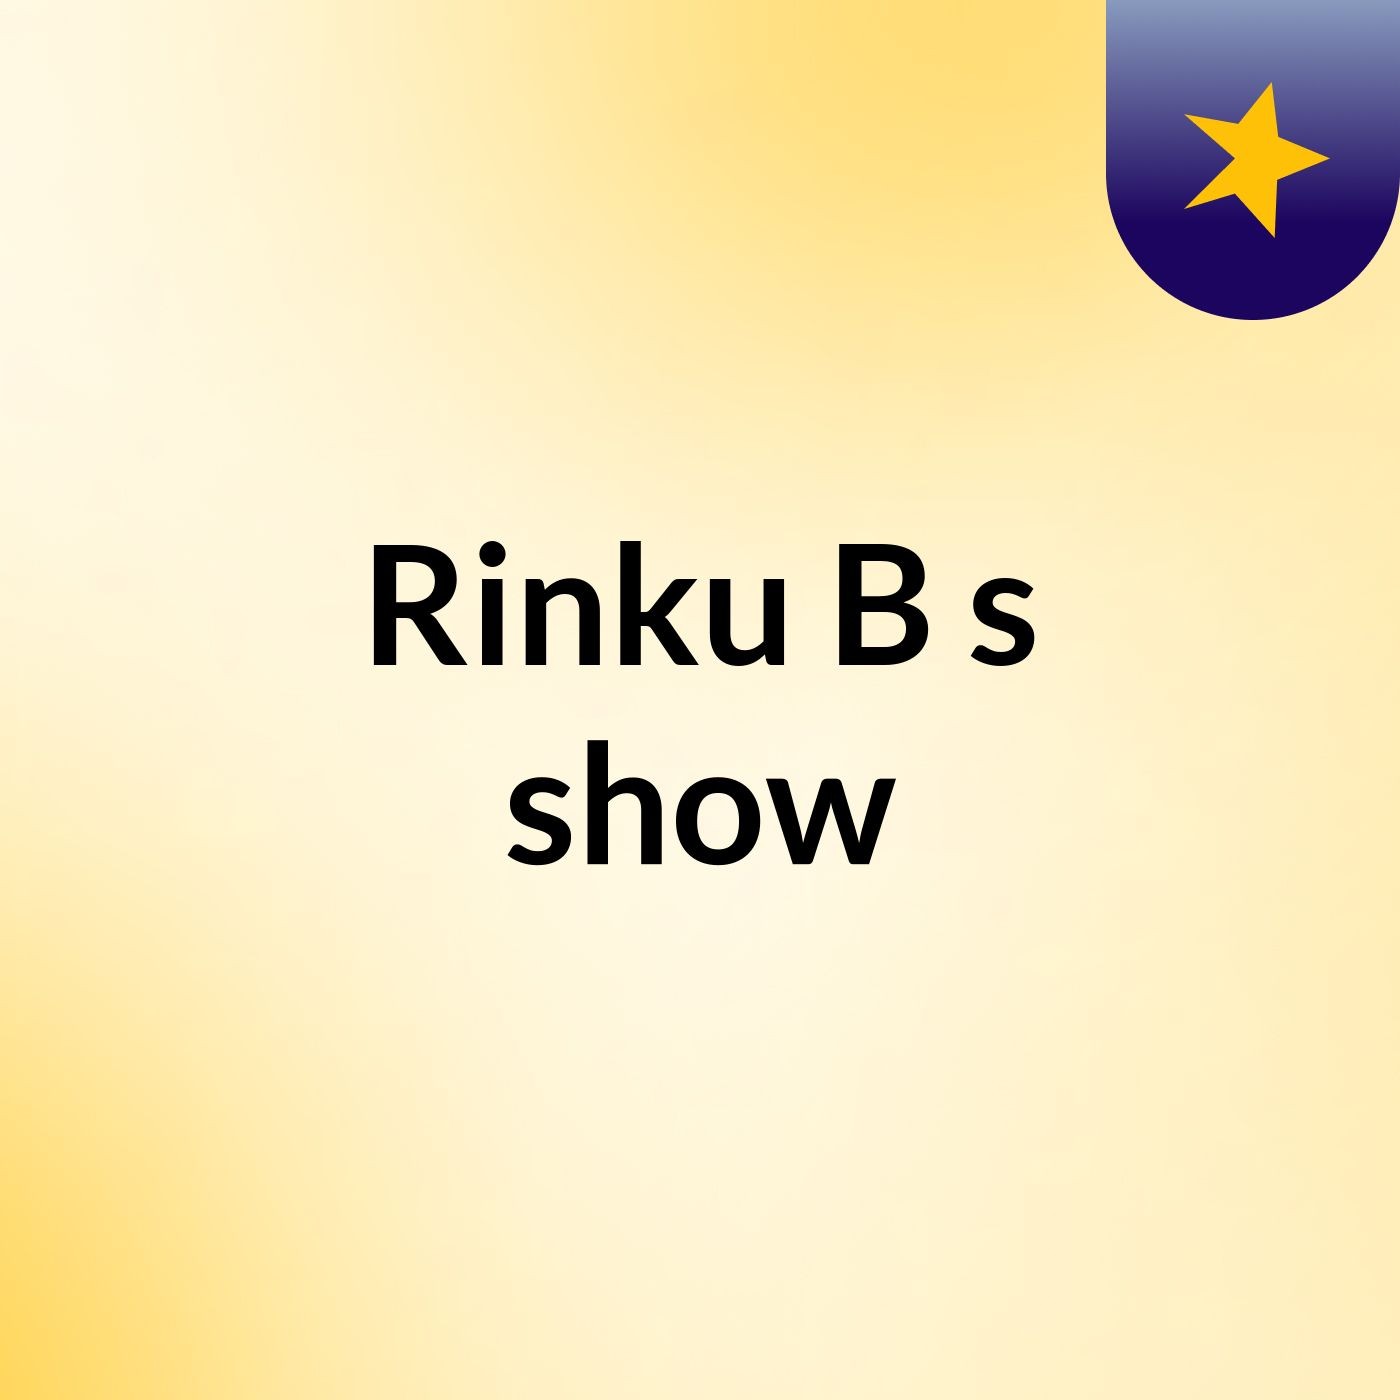 Rinku B's show